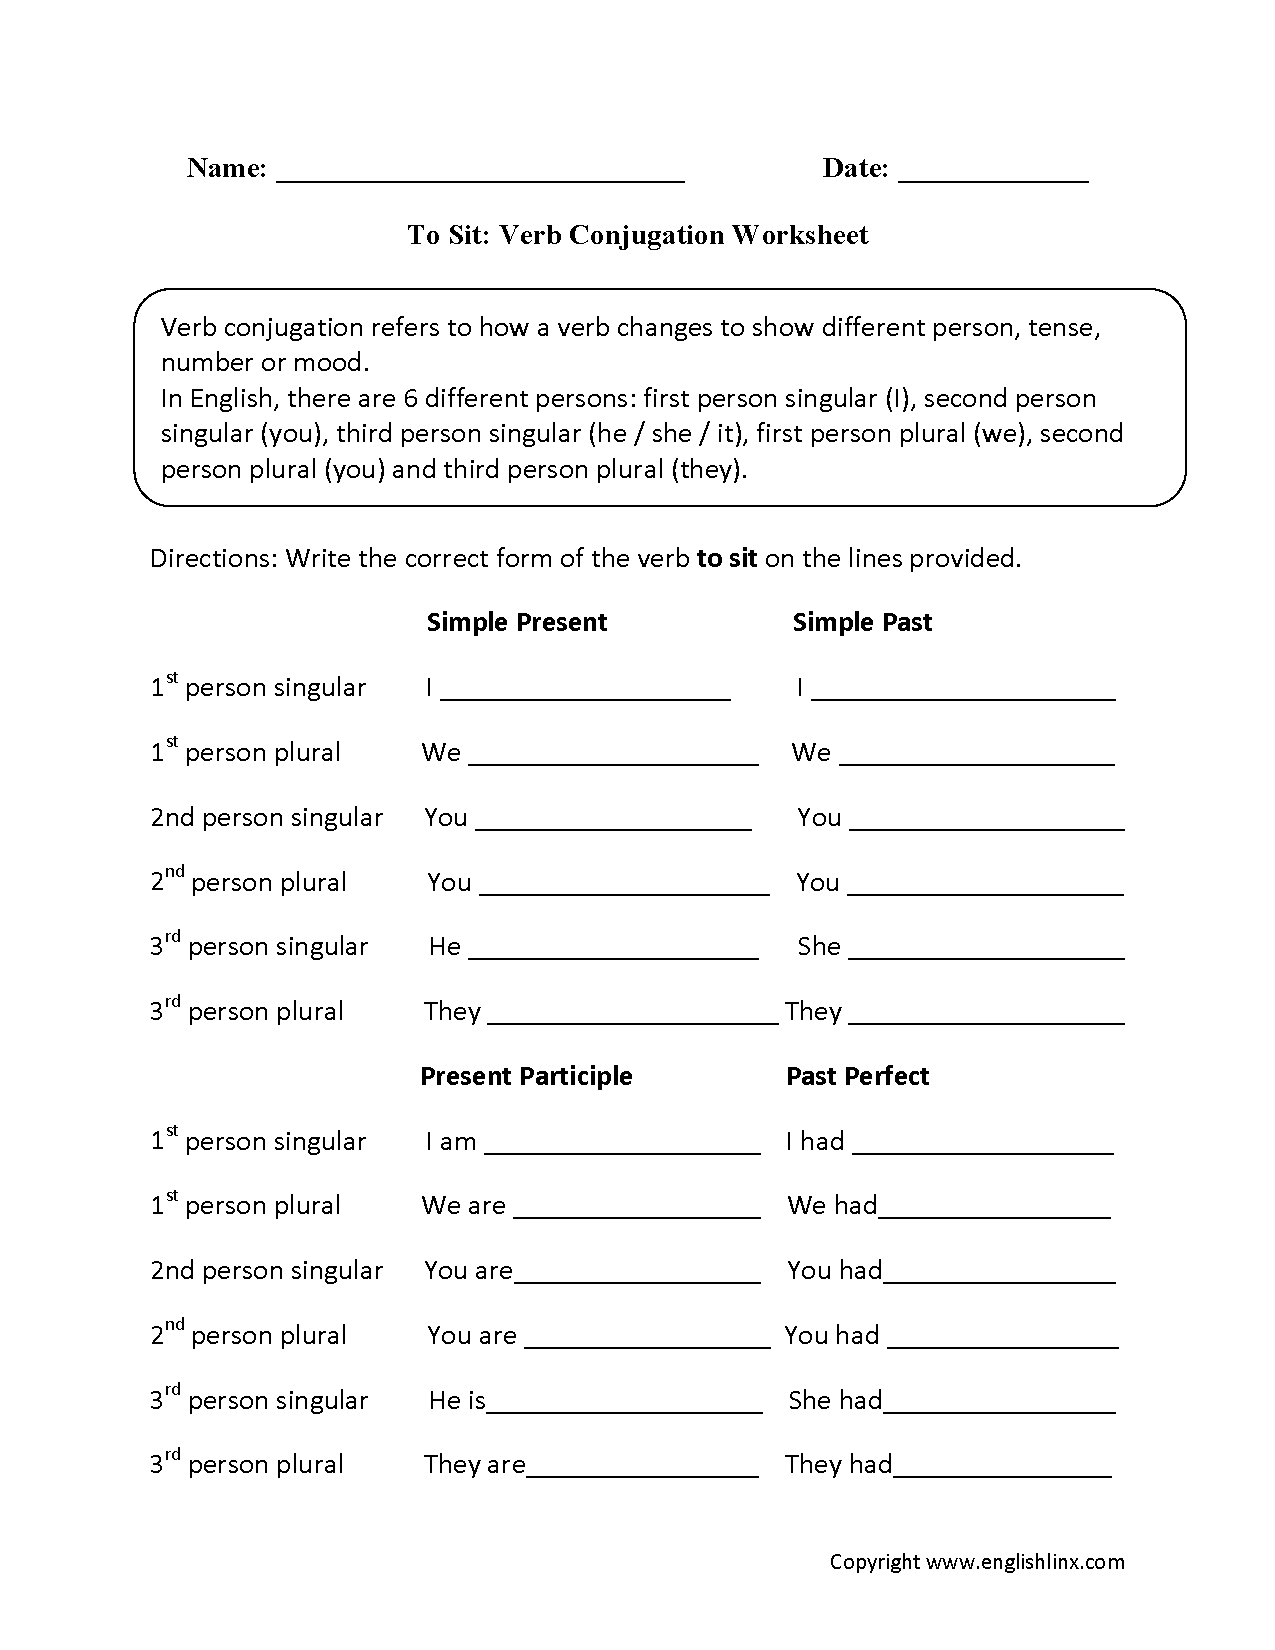 To Sit Verb Conjugation Worksheets